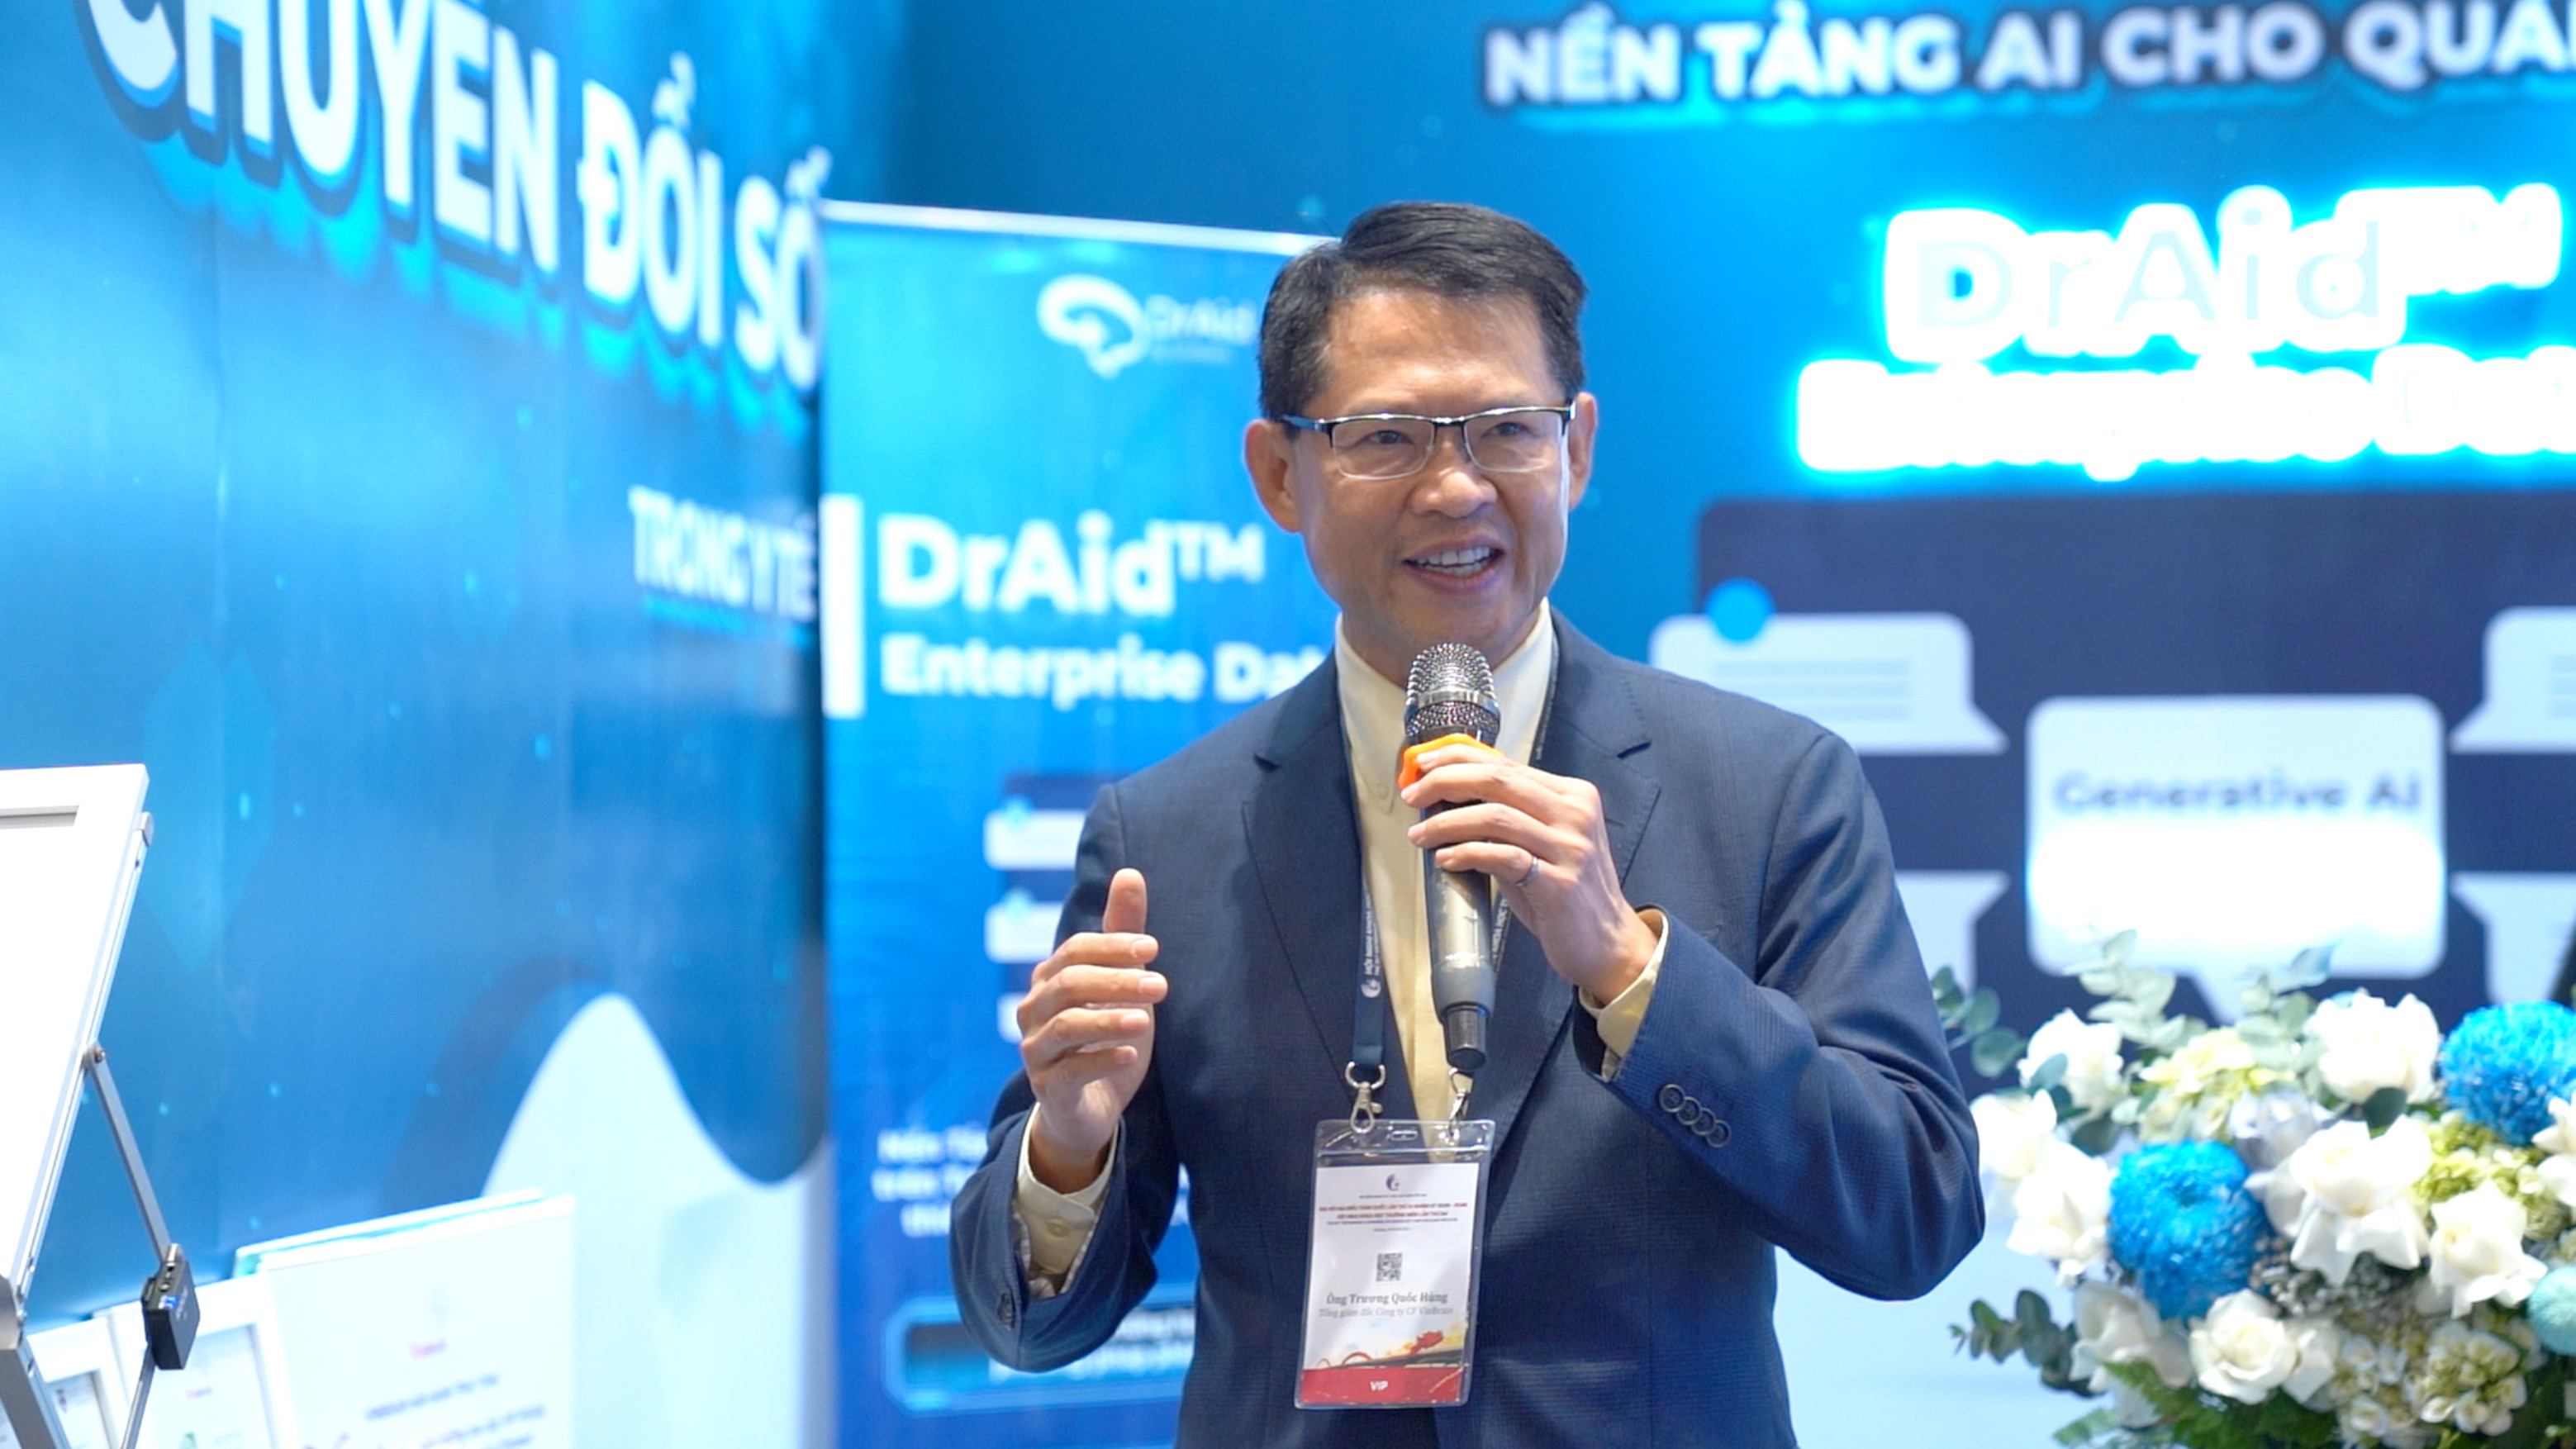 VinBrain unveils DrAid™ Enterprise Data Platform for digital transformation